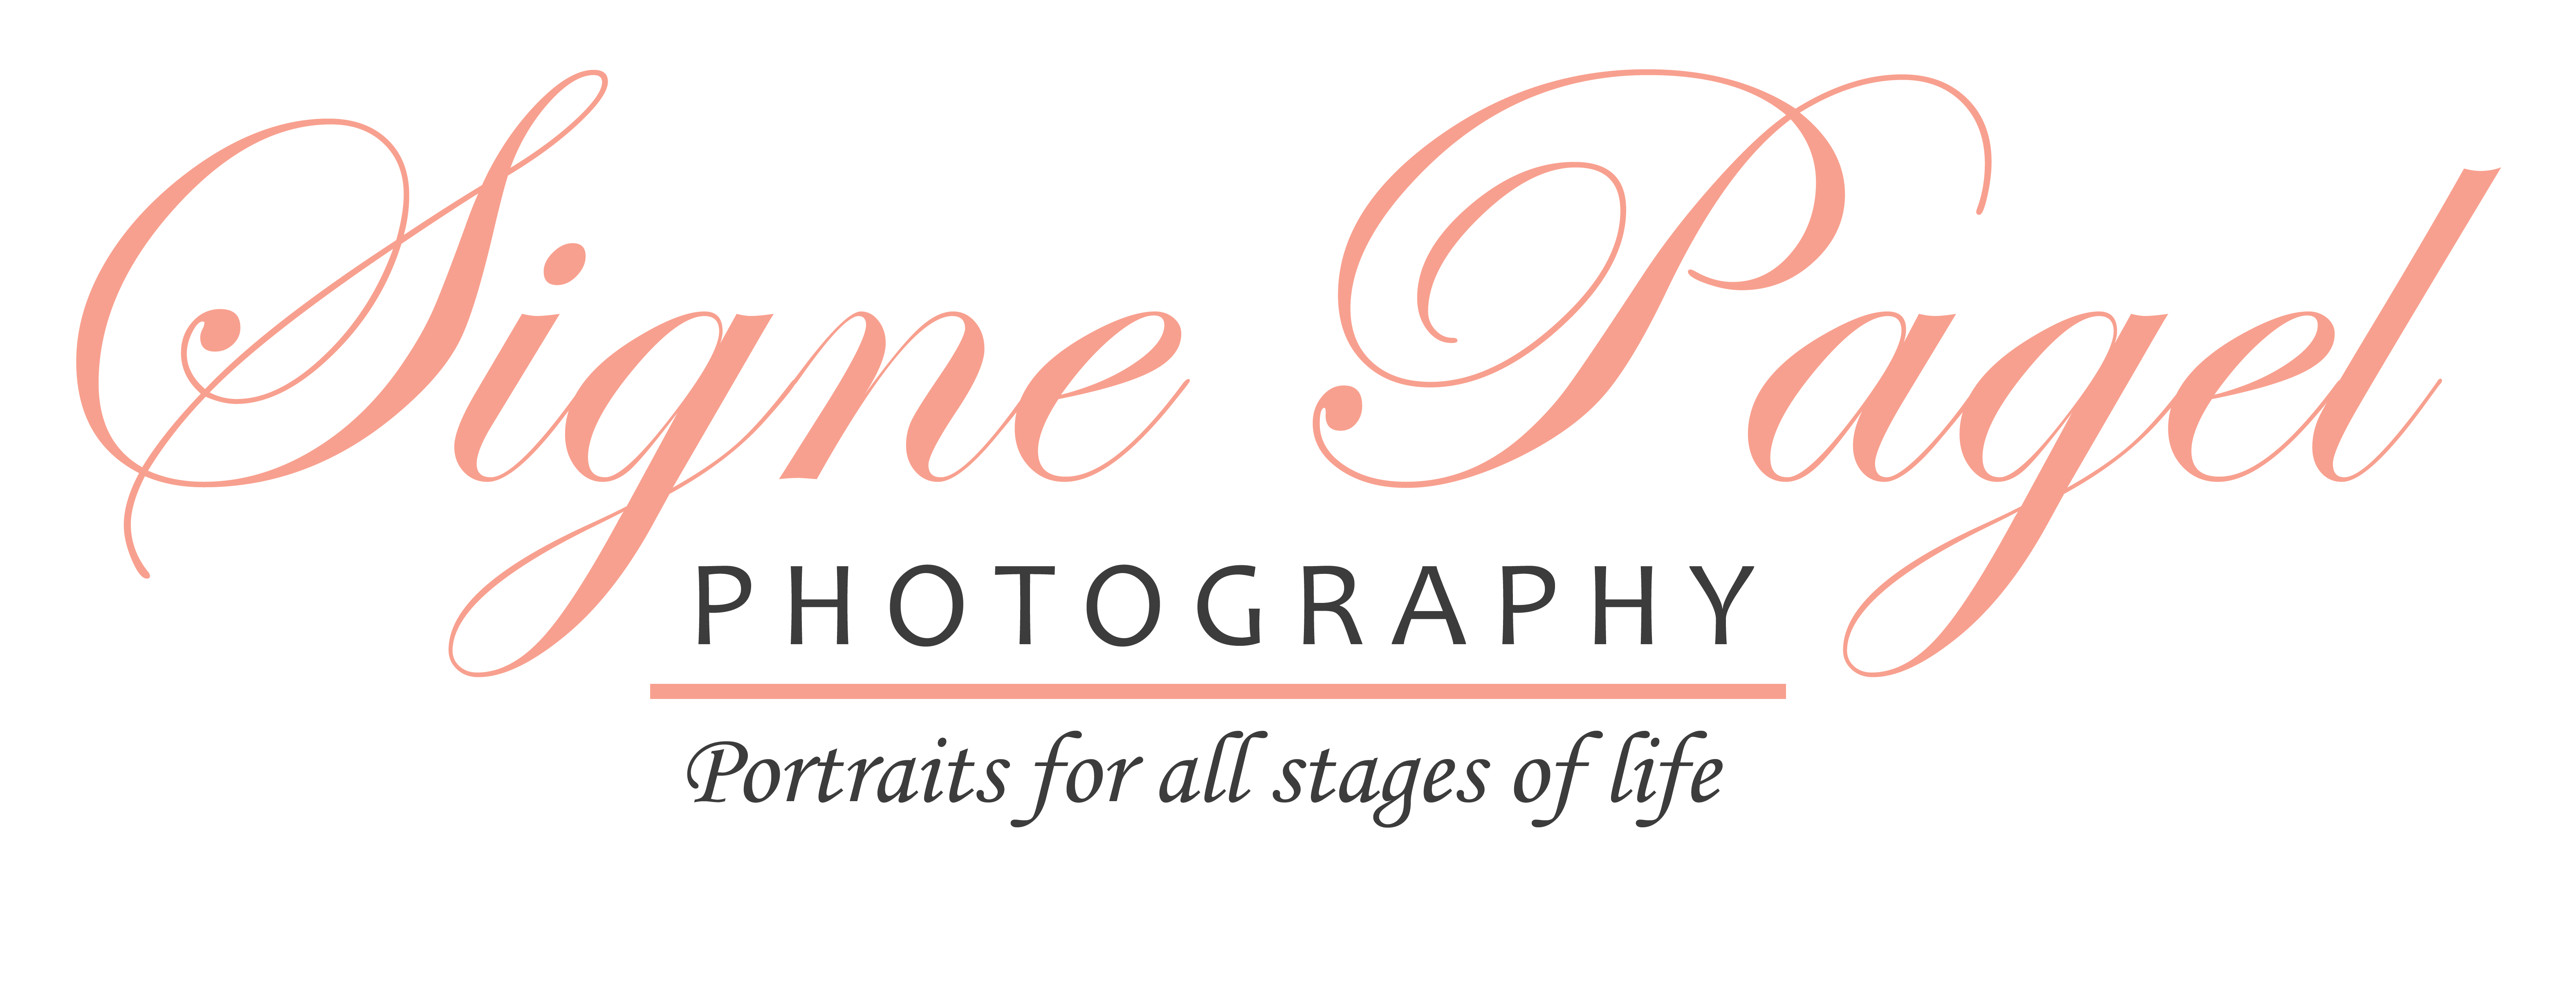 Signe Pagel Photography Logo